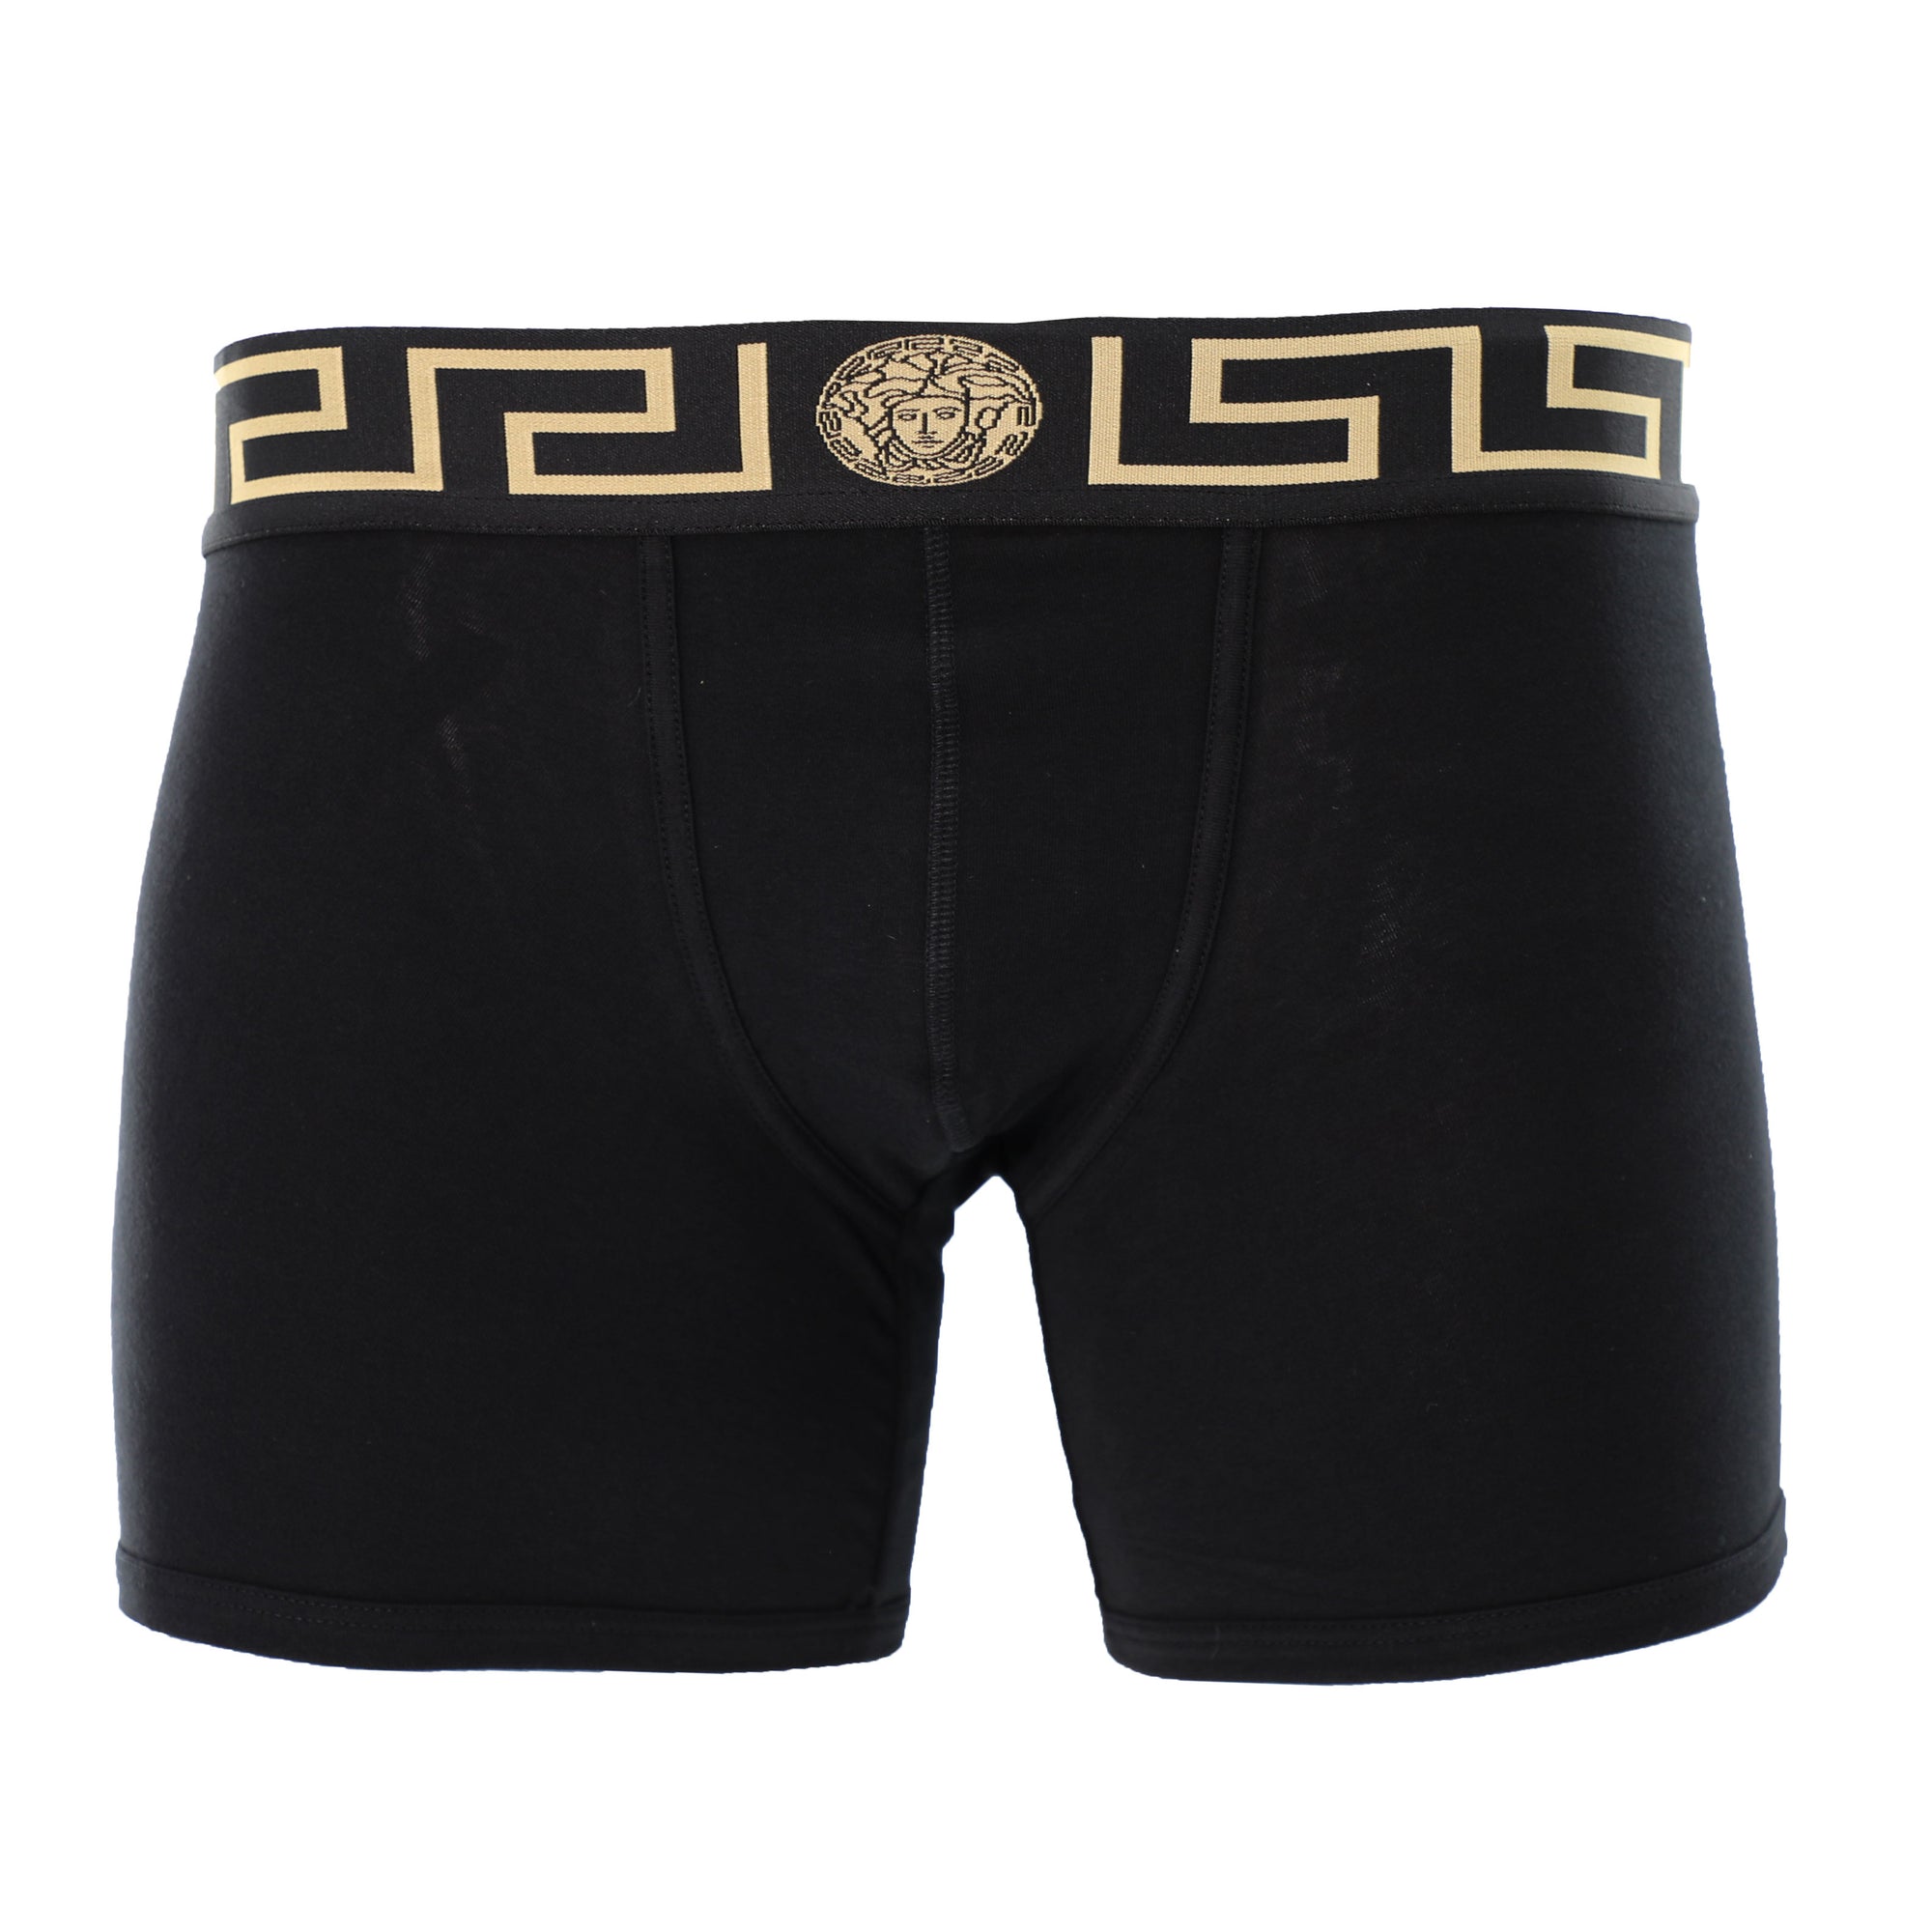 Versace Underwear Long Trunk W/Greca Border - Black/Gold